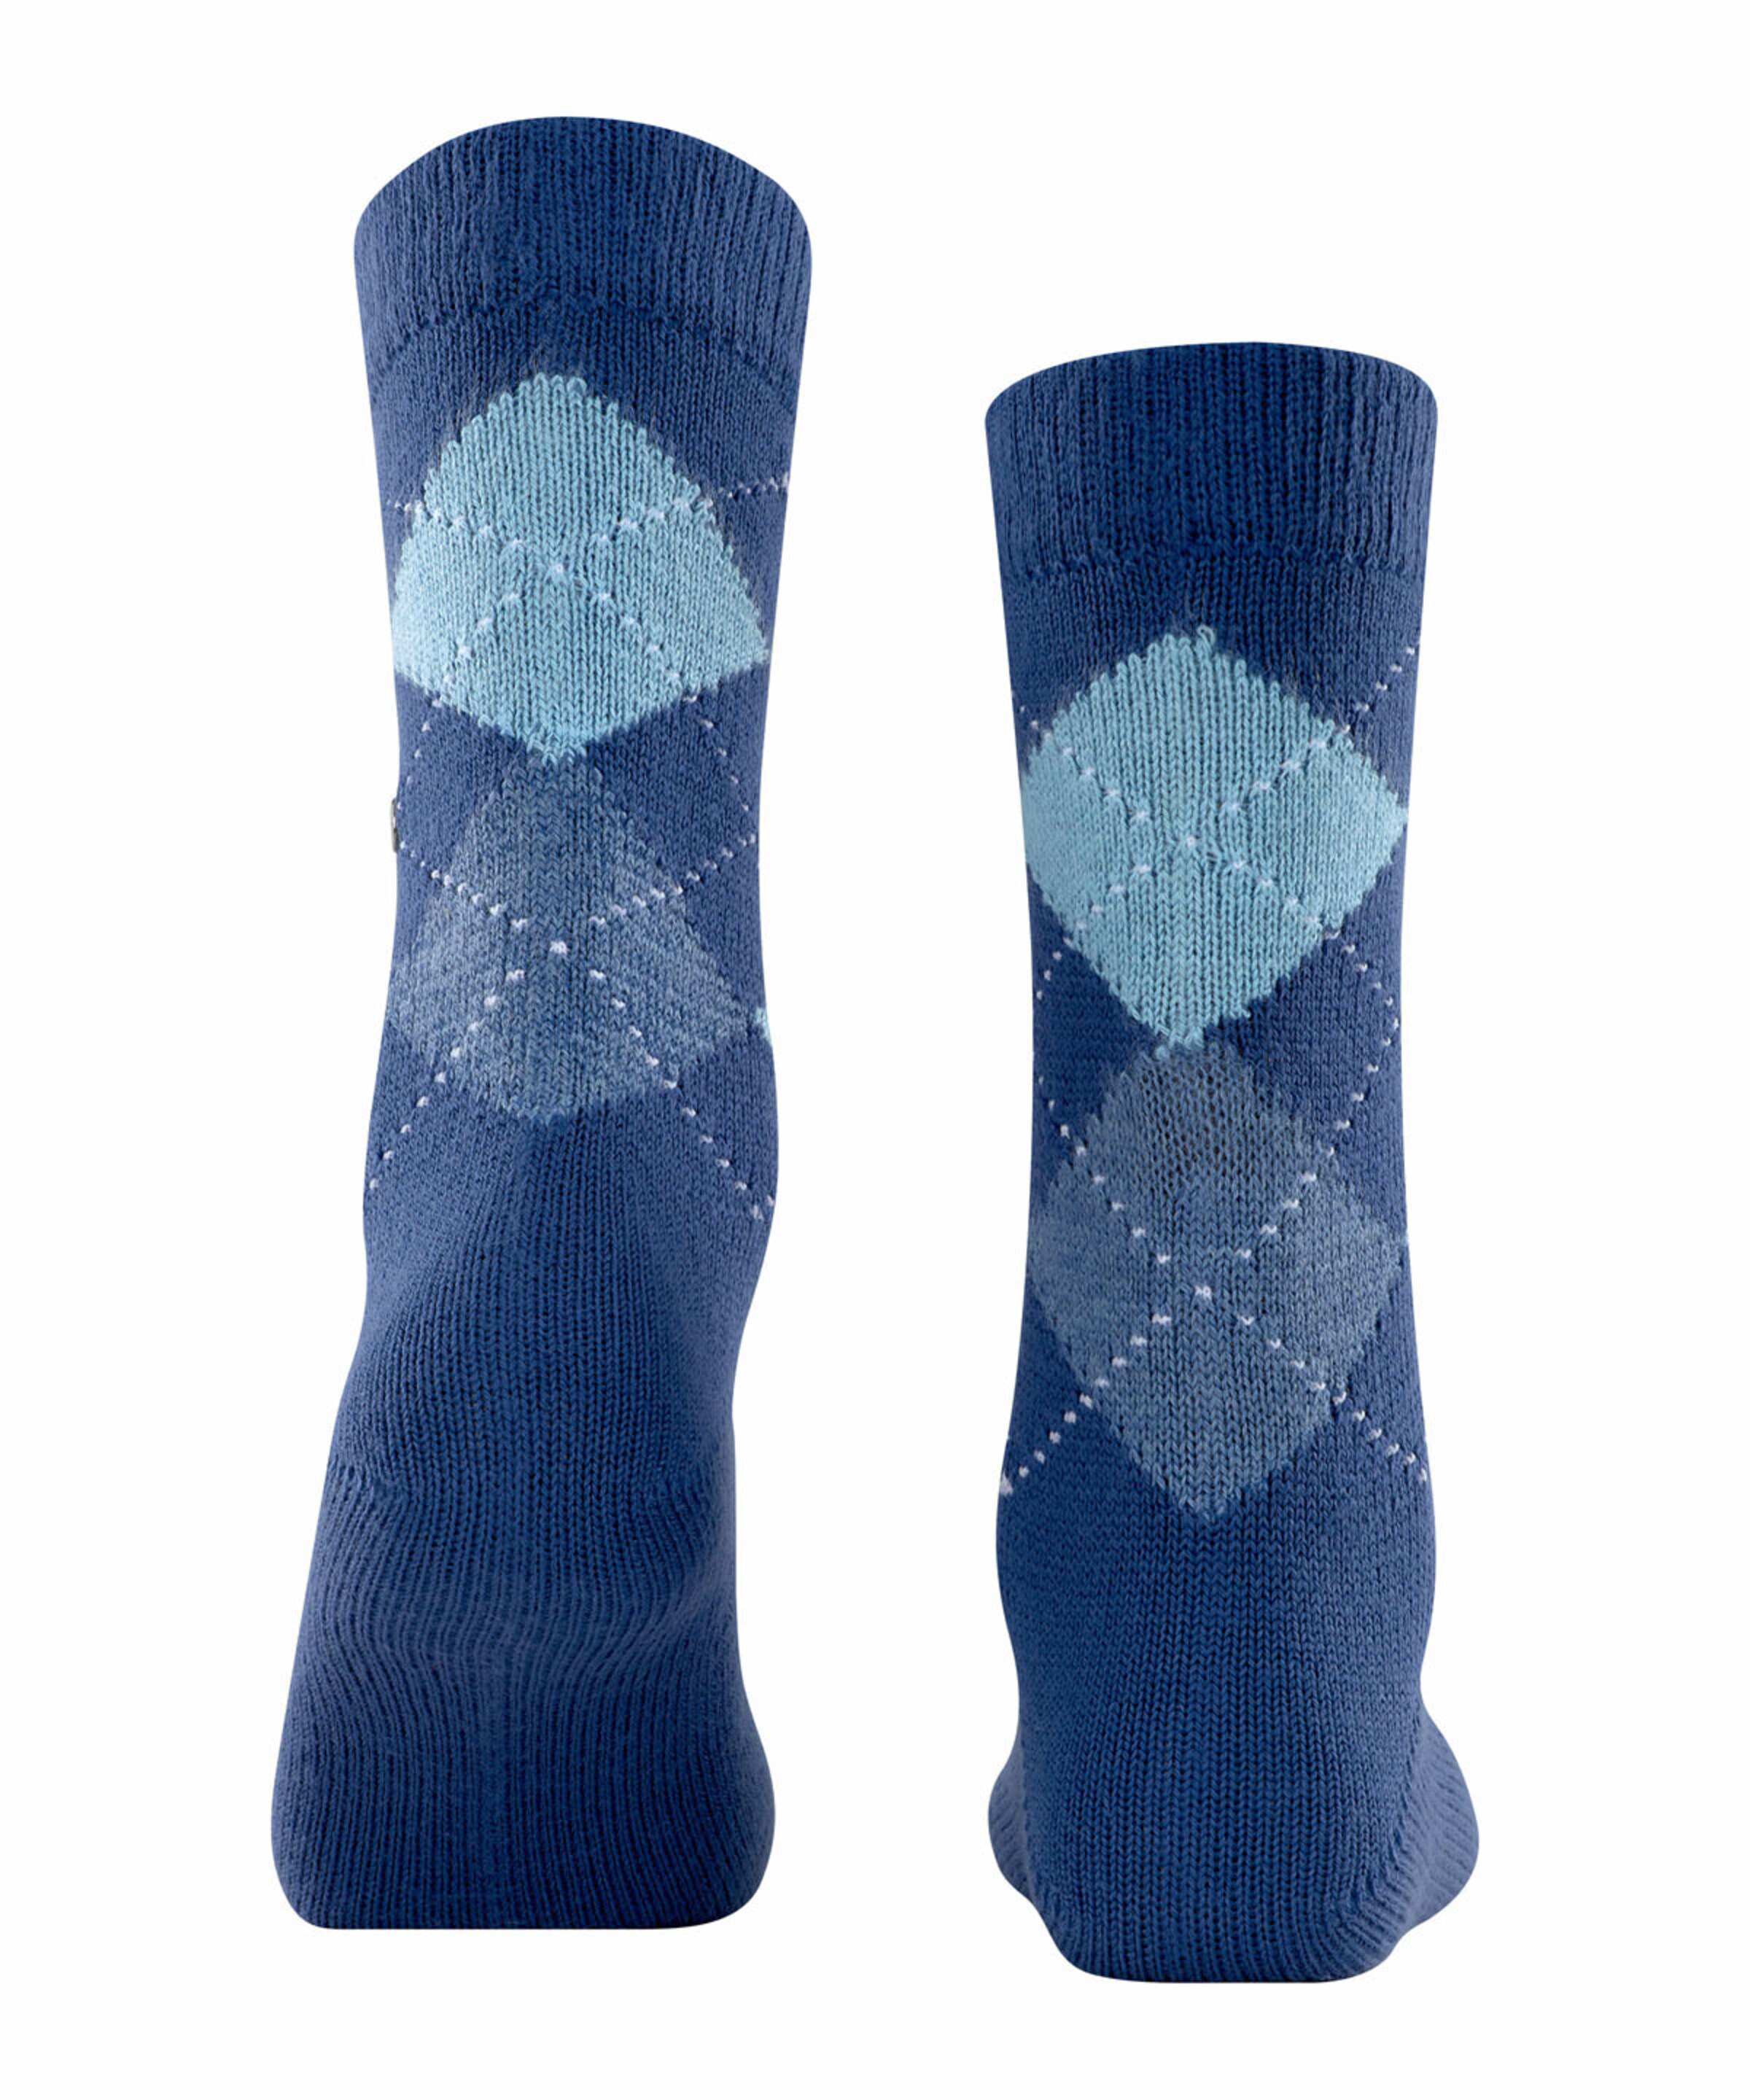 Frauen Wäsche BURLINGTON Socken in Blau, Hellblau - WE98706